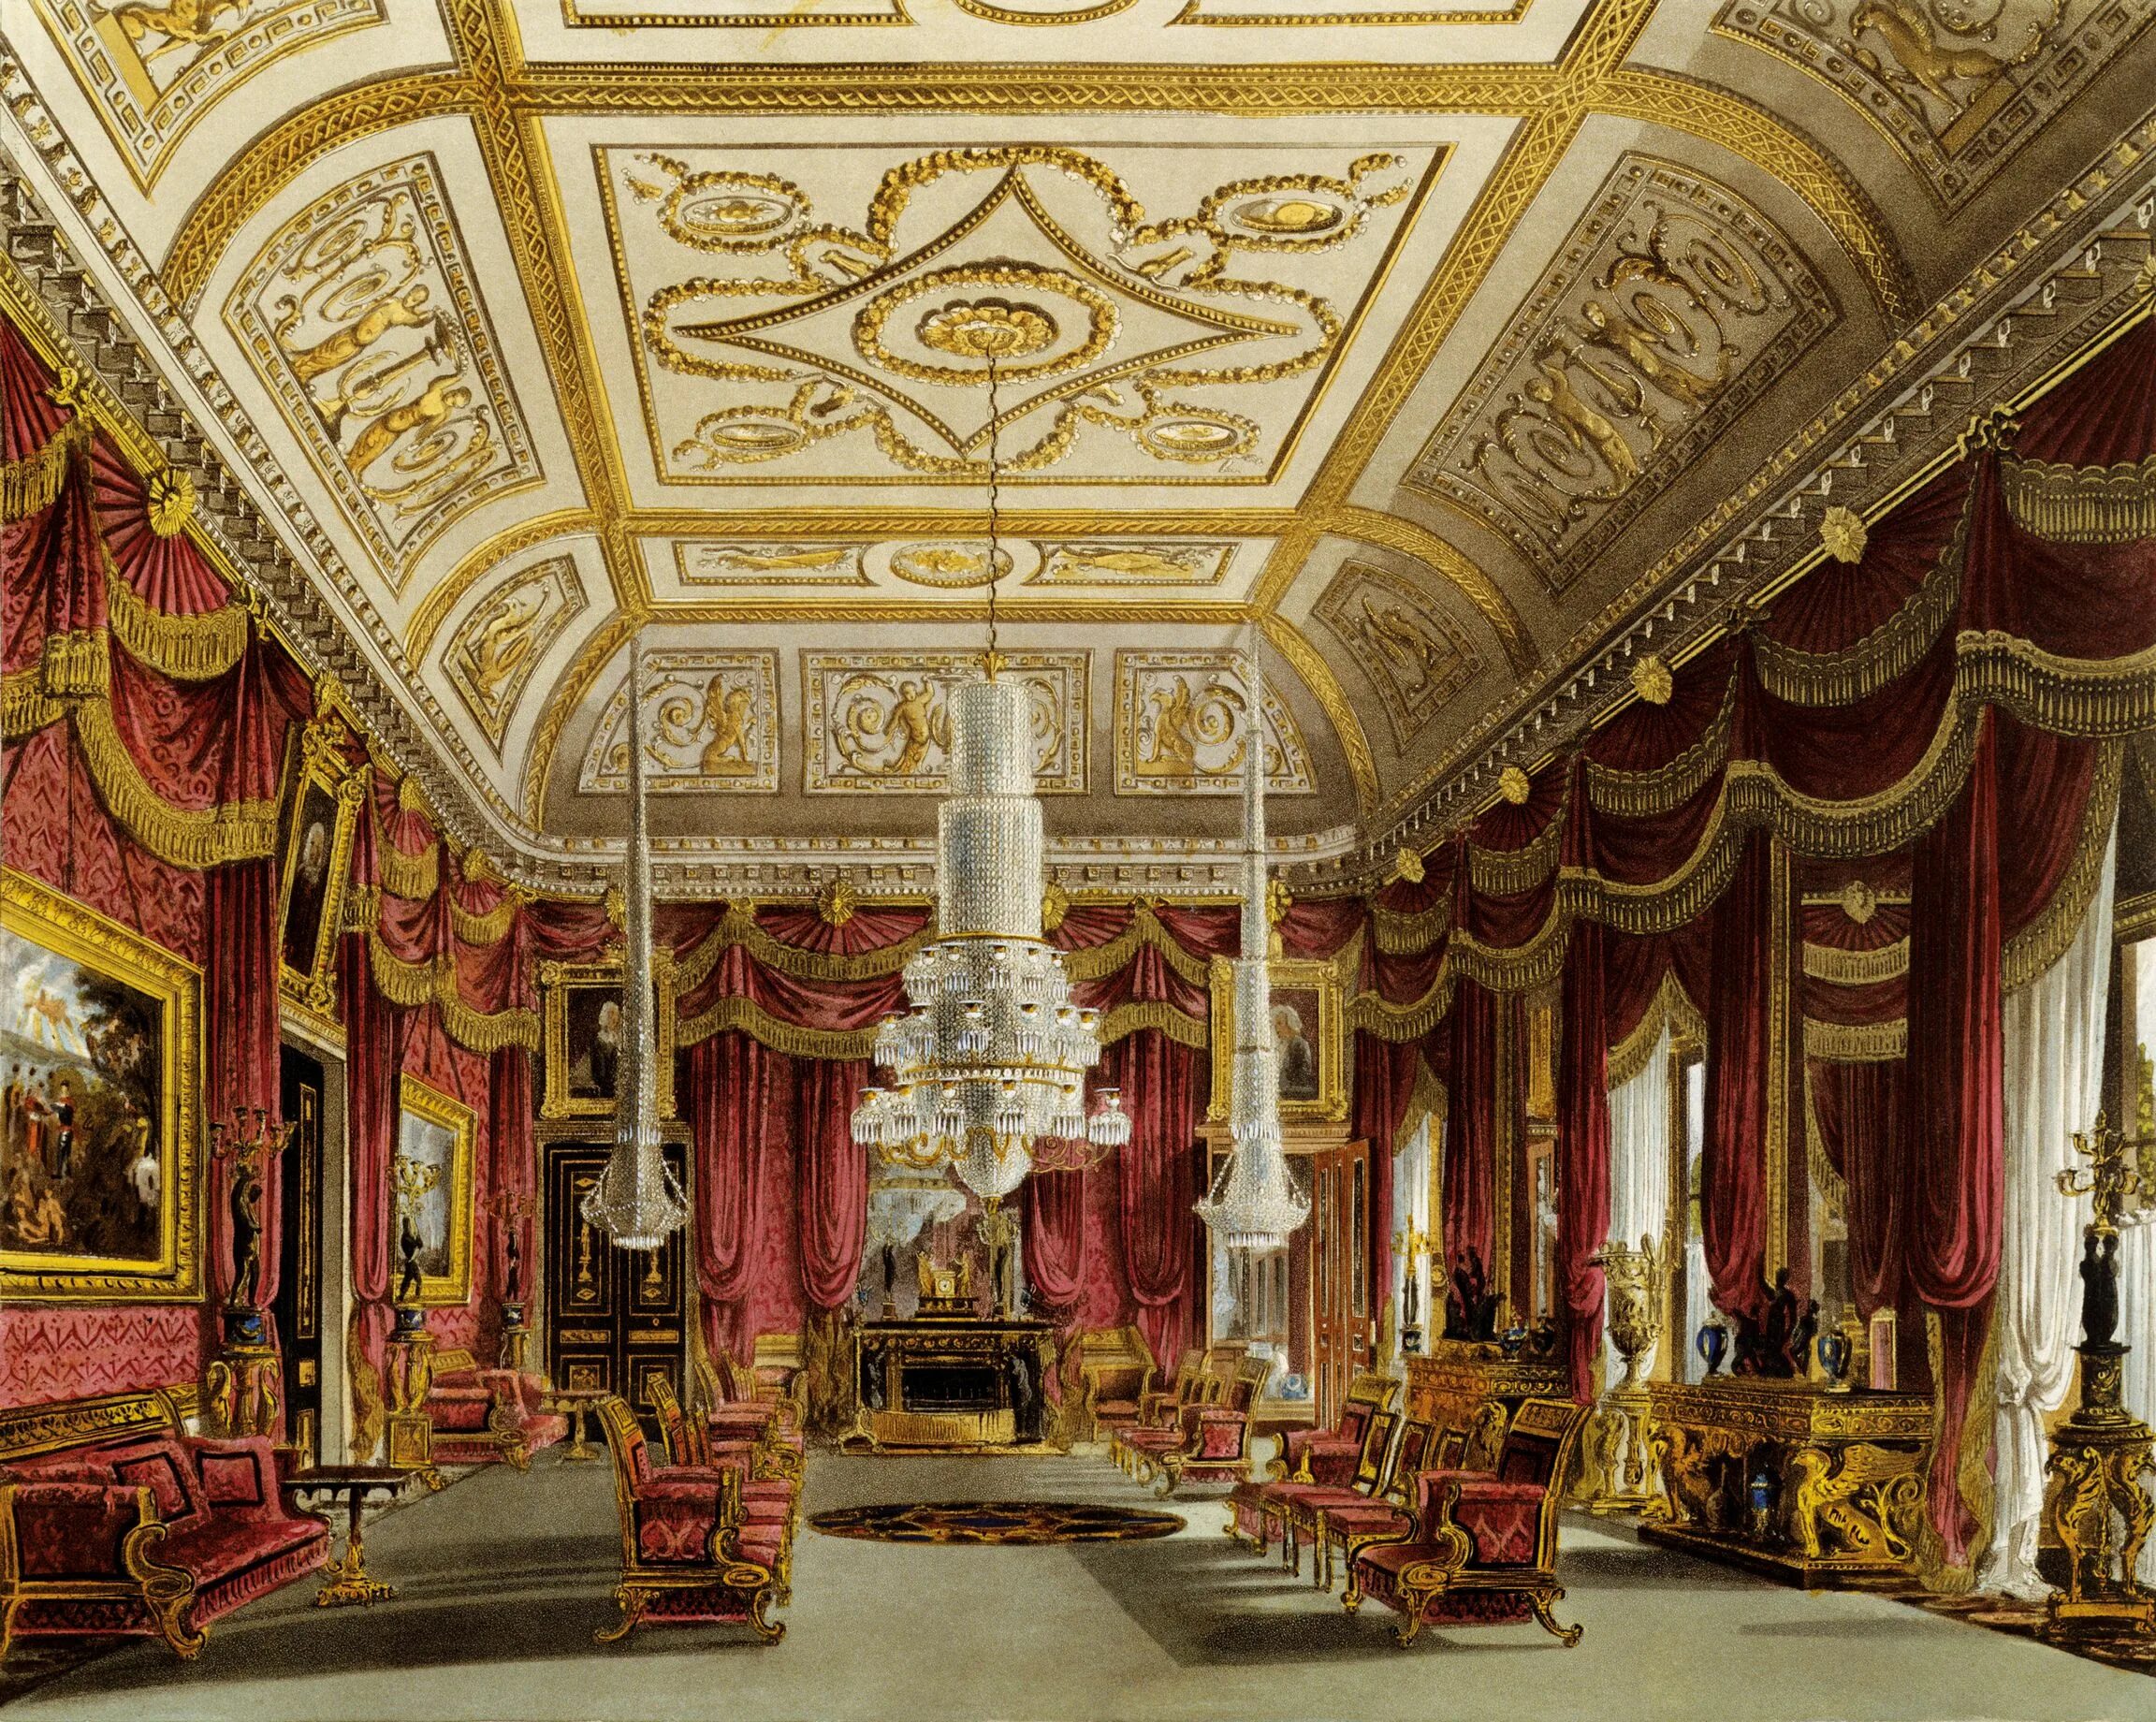 Карлтон Хаус дворец. Интерьер Ампир 19 век дворец. Ампир регентство. Королевский дворец внутри 19 века.